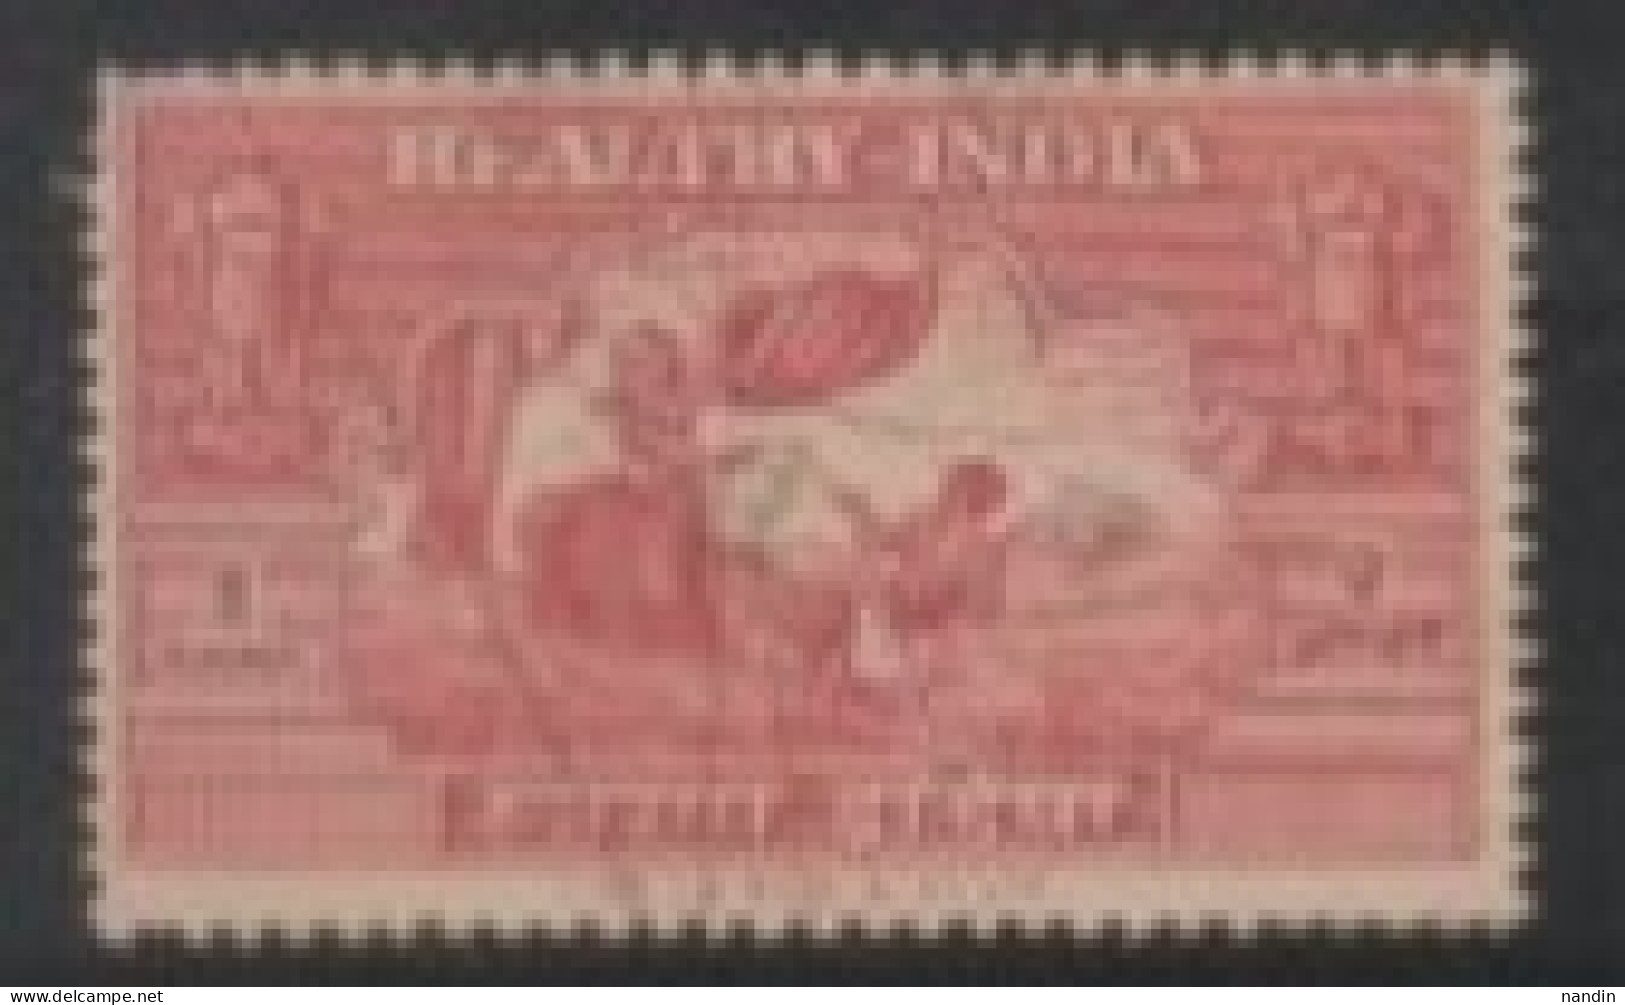 INDIA 1951 HEALTHY INDIA 1 ANNA USED PROPAGANDA STAMPS - Wohlfahrtsmarken